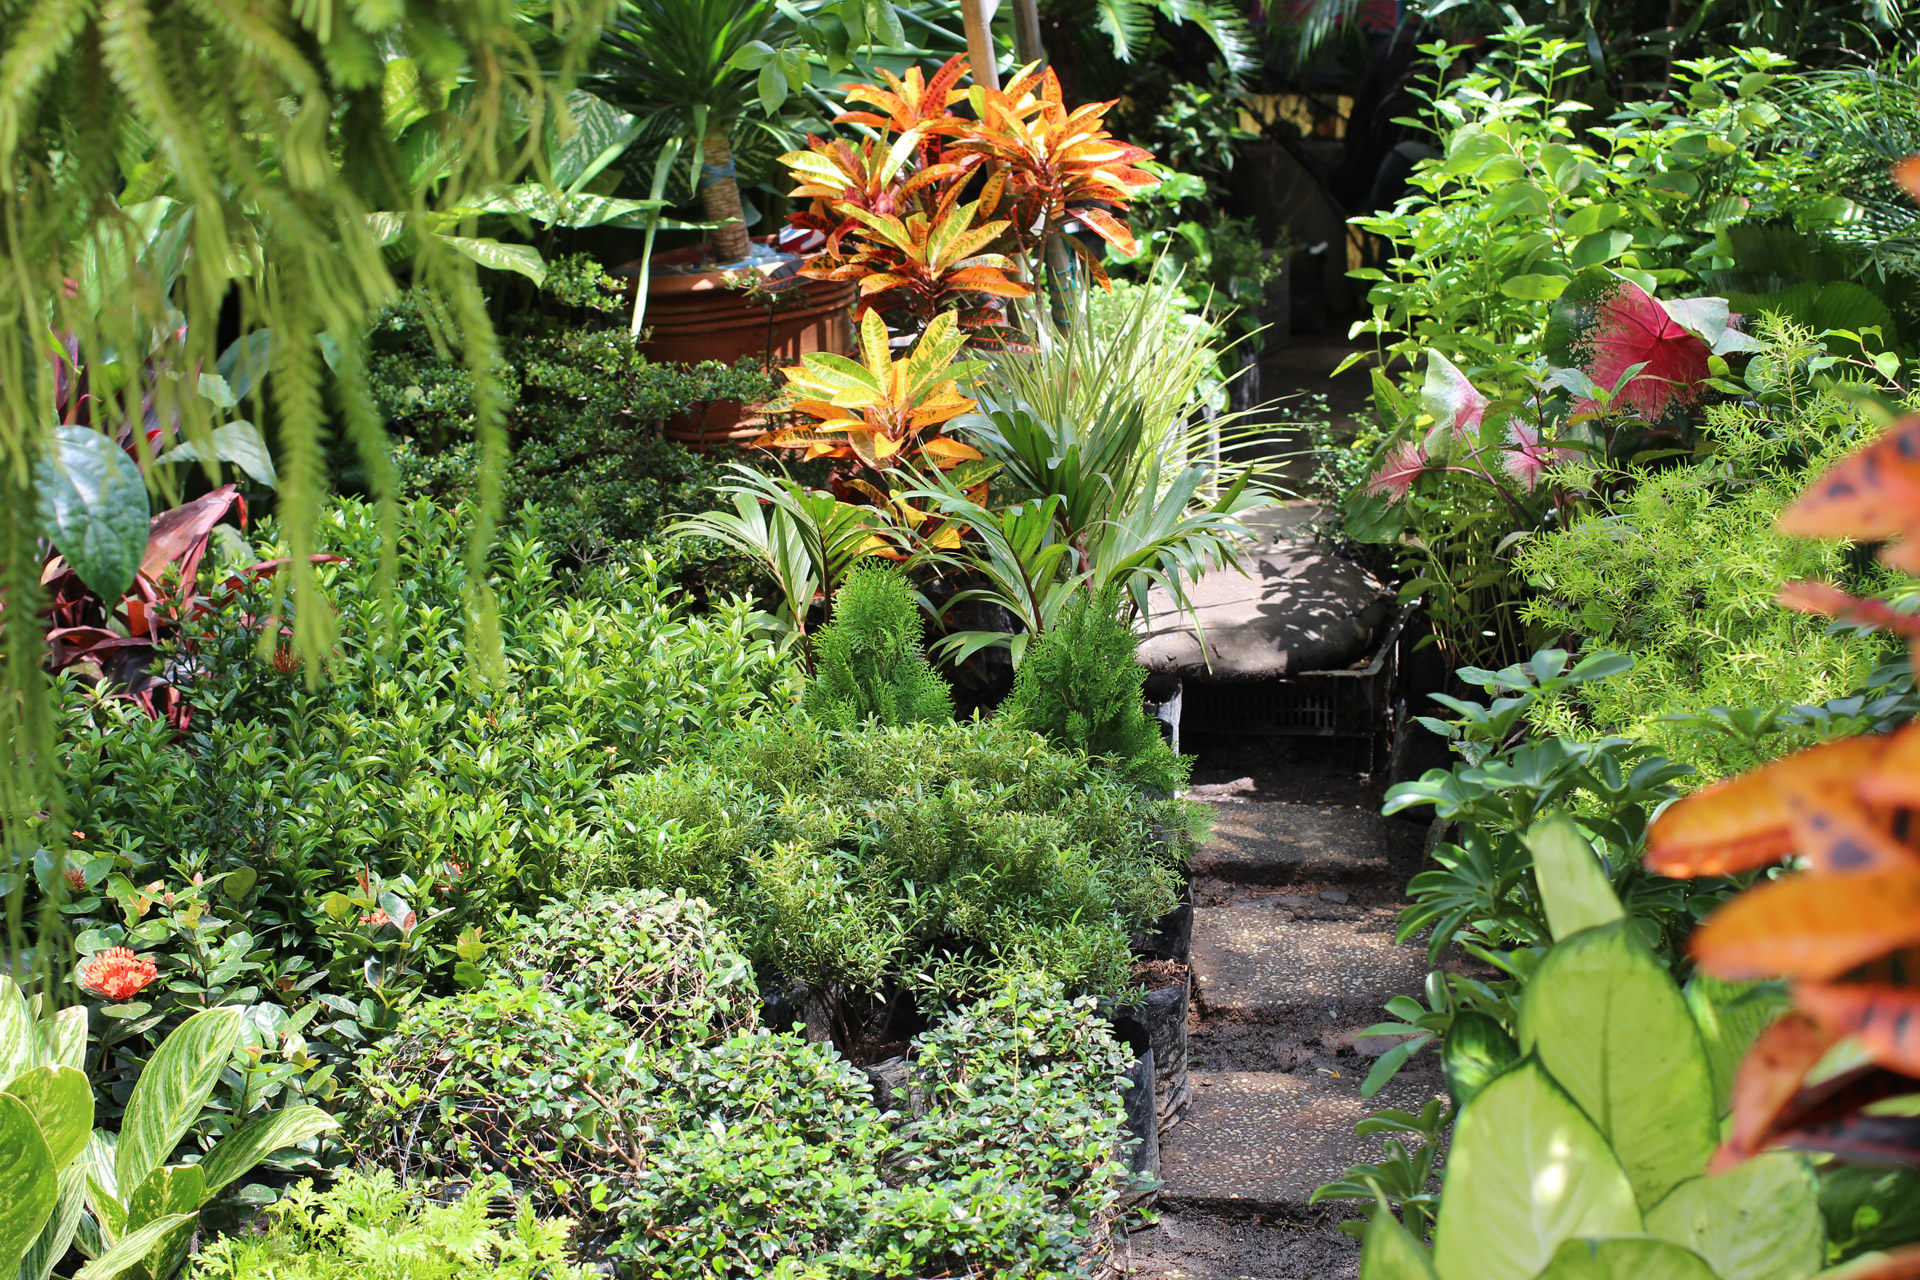 A garden in the Philippine seedling bank by Adryan Villanueva